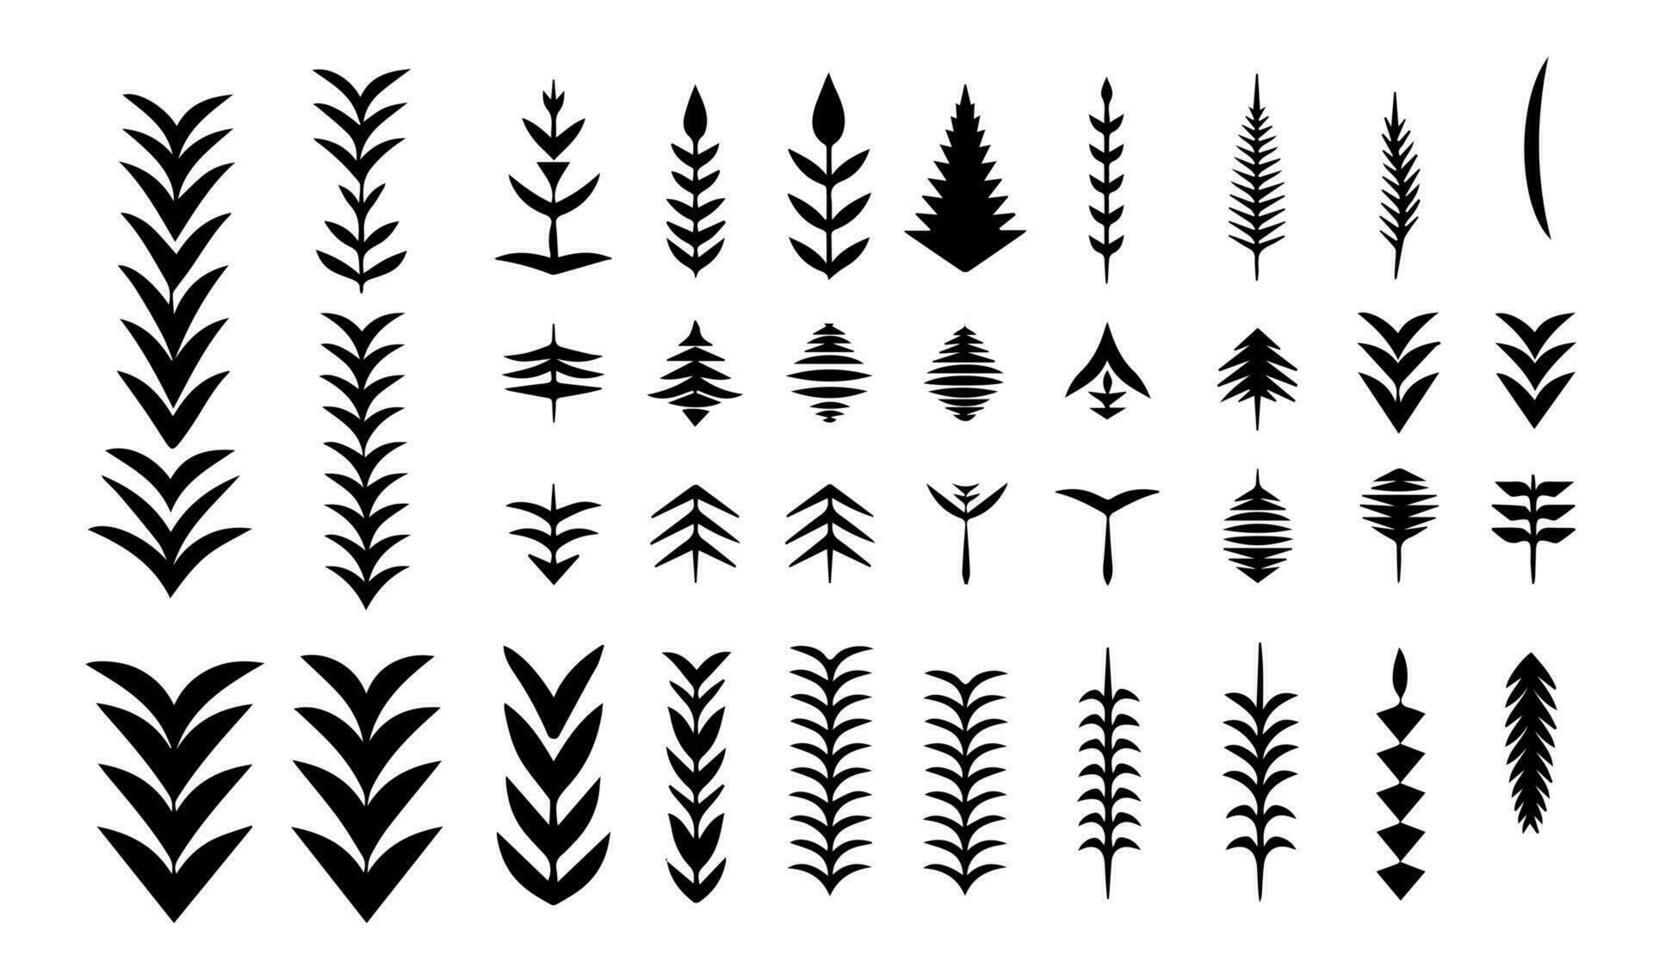 Set of arrows. Black silhouettes of arrows. Vector illustration.